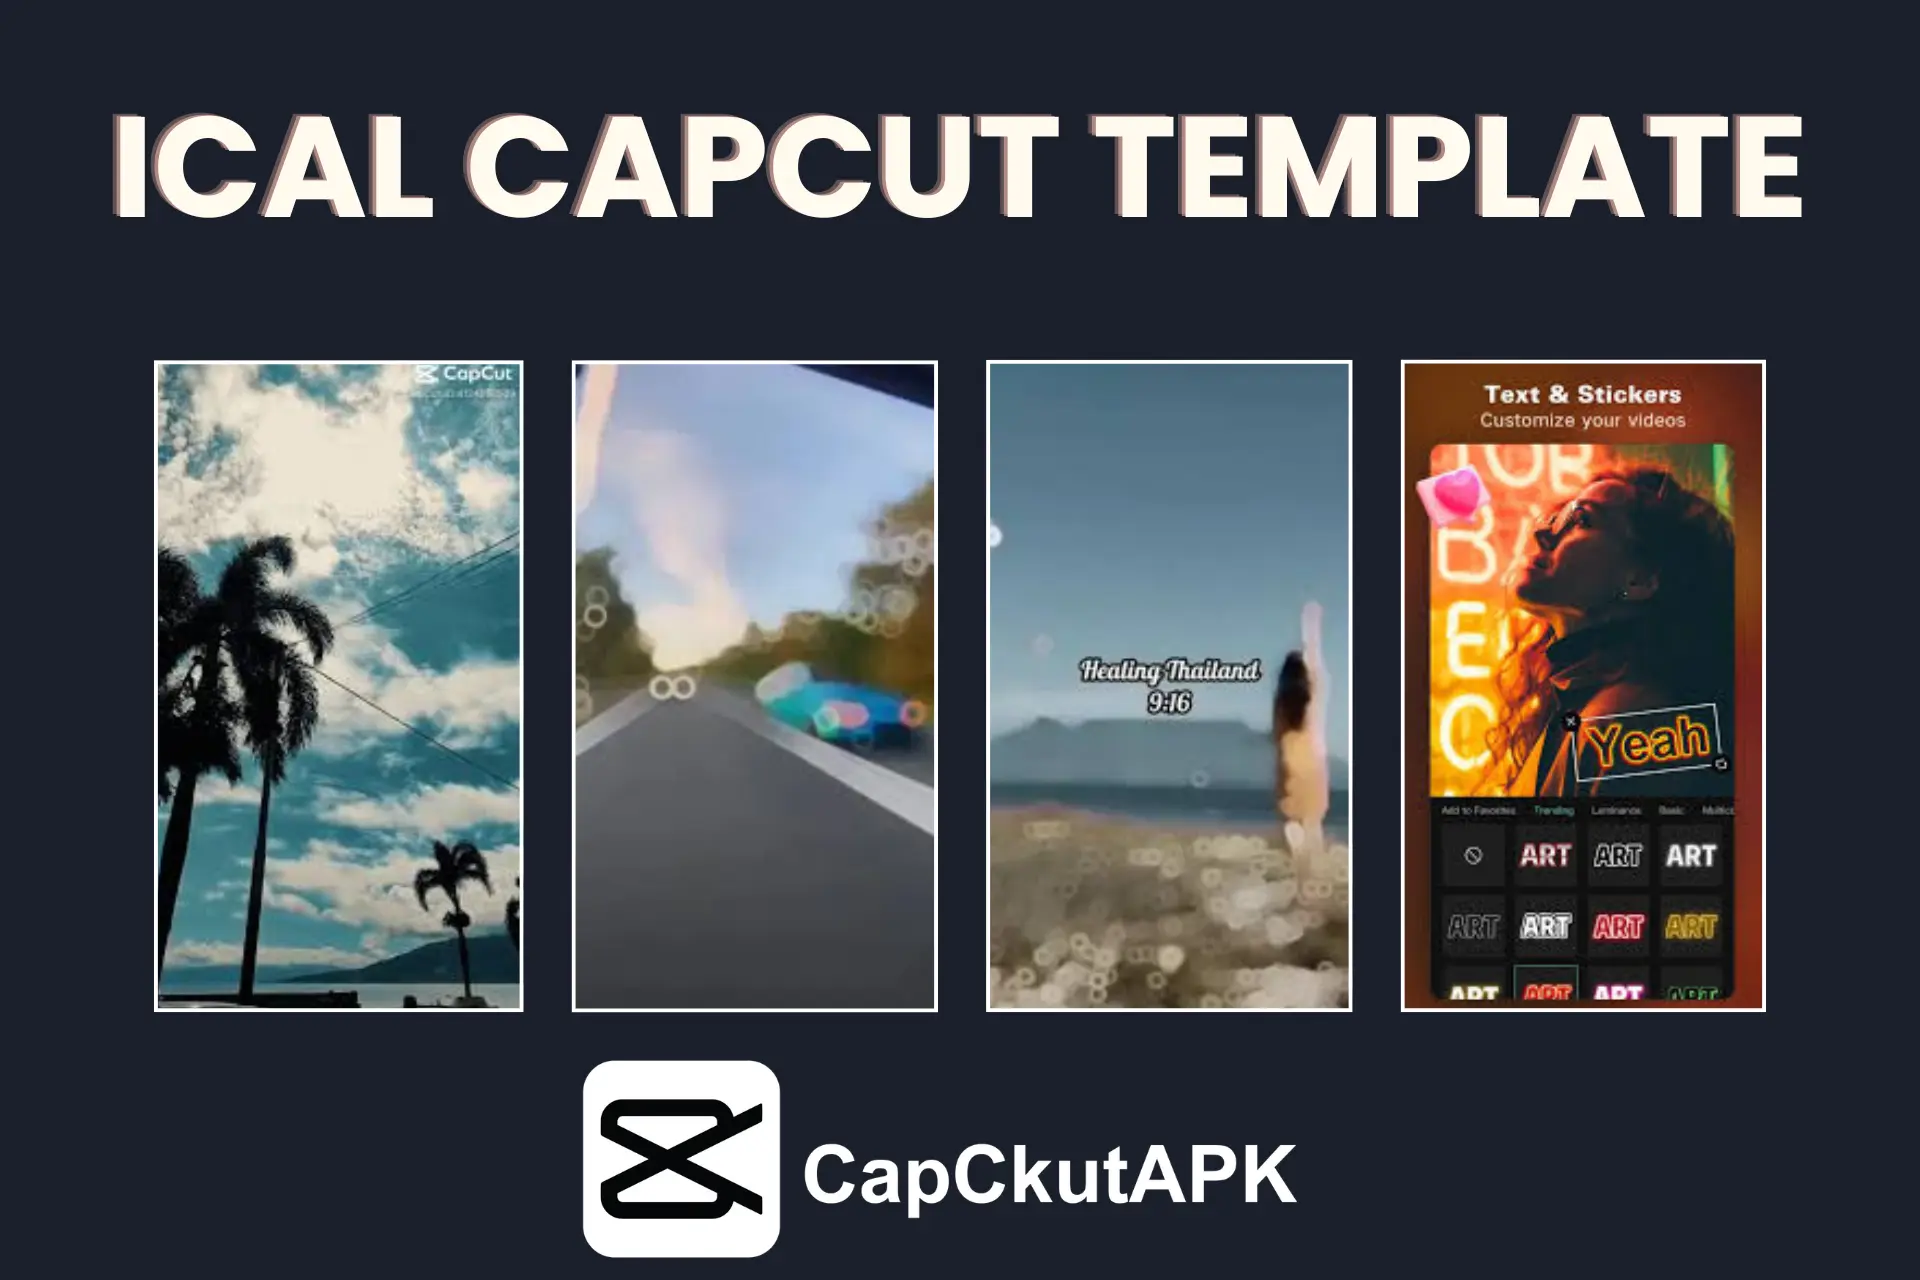 ICAL Capcut TEmplate